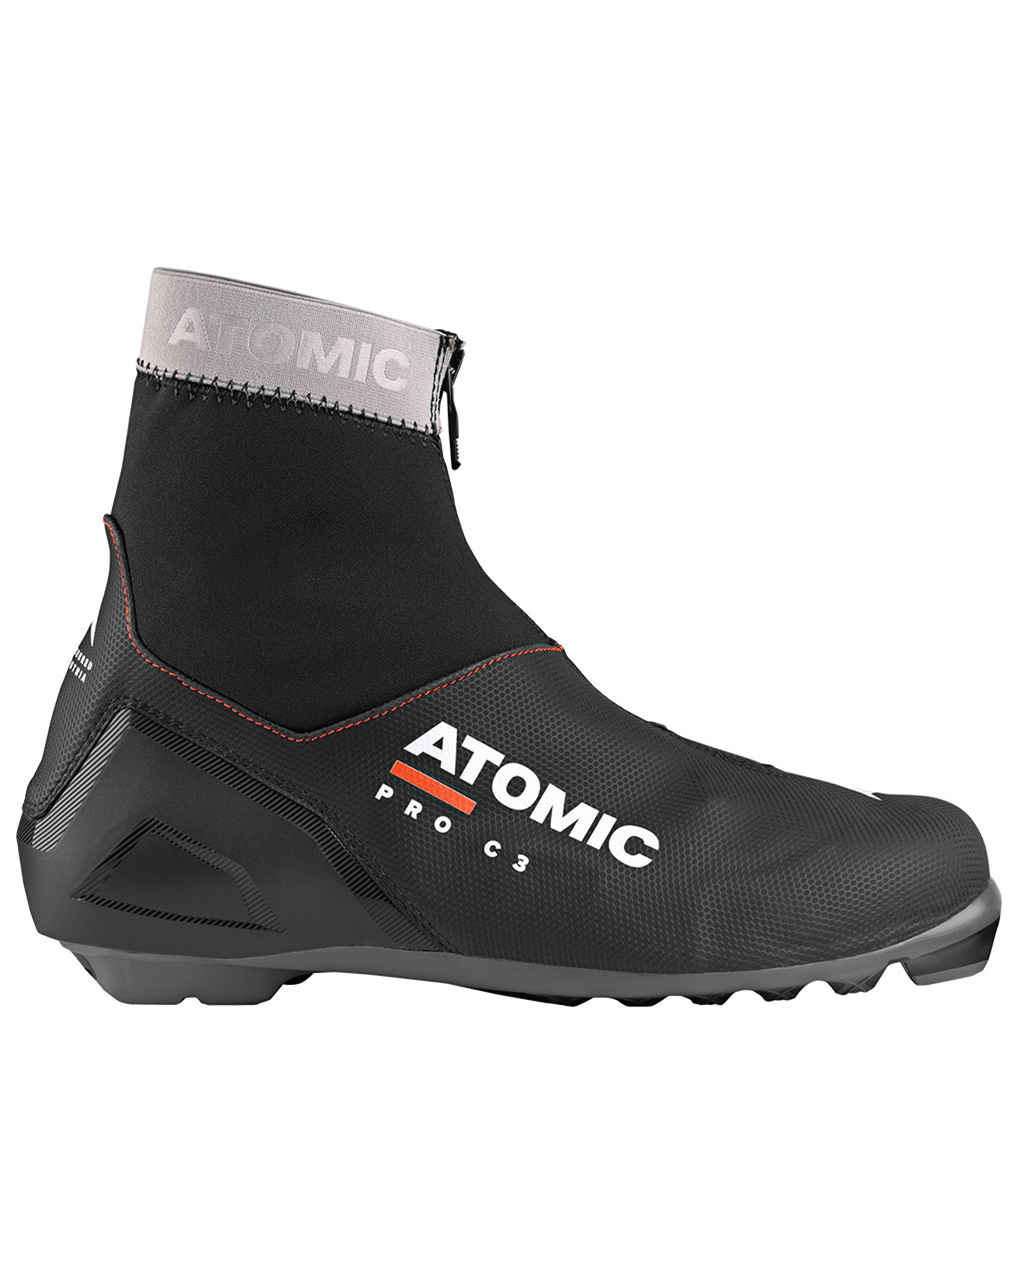 Atomic Pro C3 Dark Grey/Black (Storlek 6.5 UK)